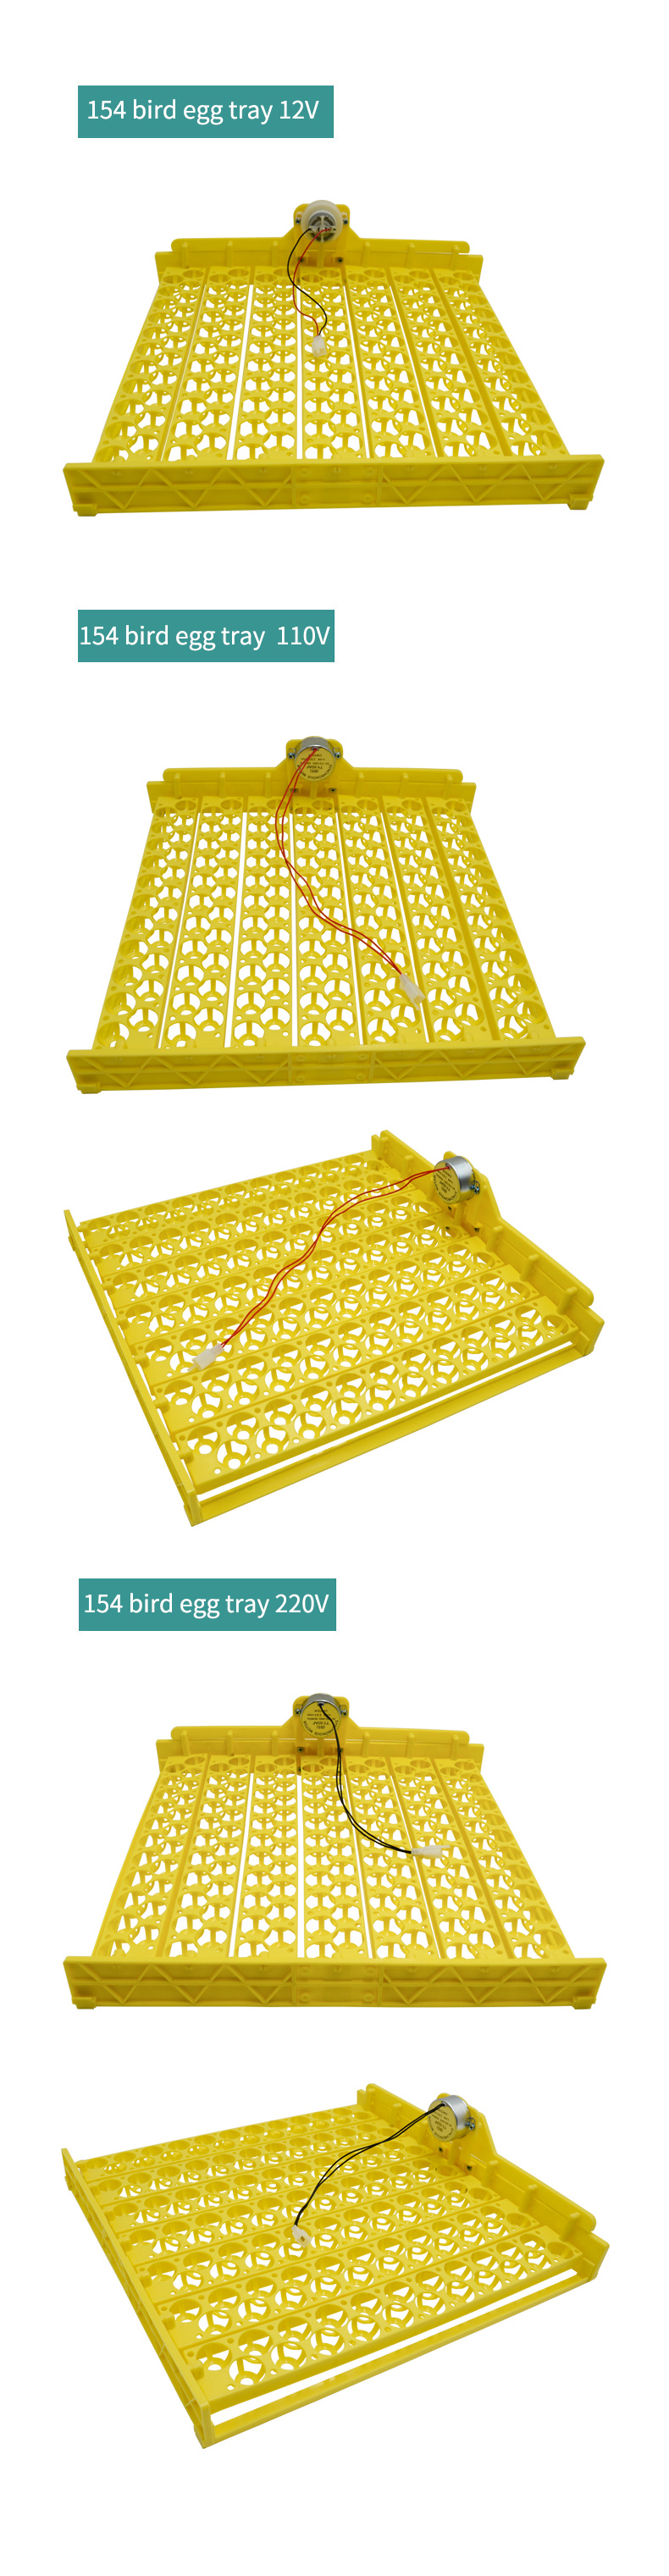 Huatuo Egg Tray Plastic Incubator Bird Egg Plate Removable Automatic Incubator Egg Tray